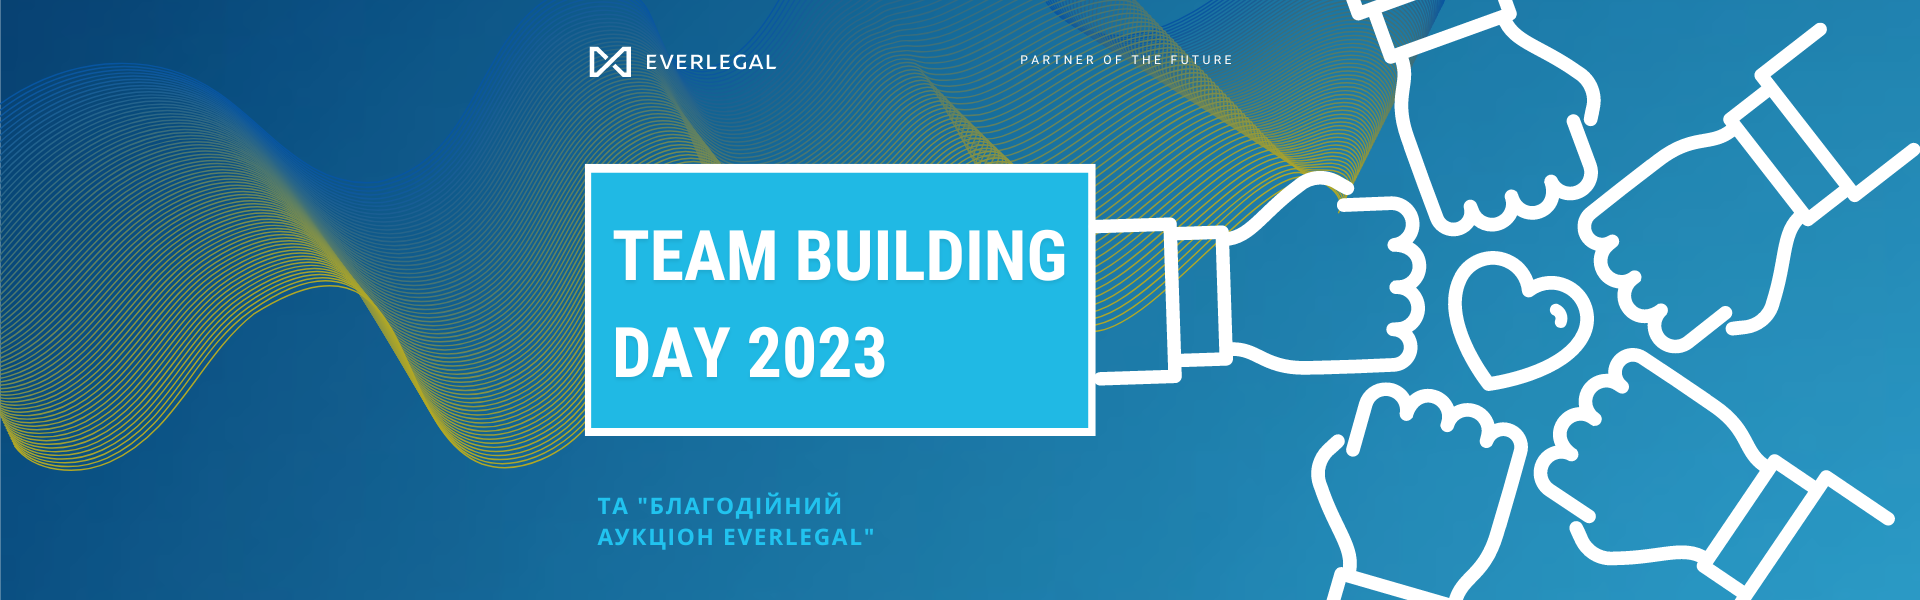 EVERLEGAL Team Building Day 2023